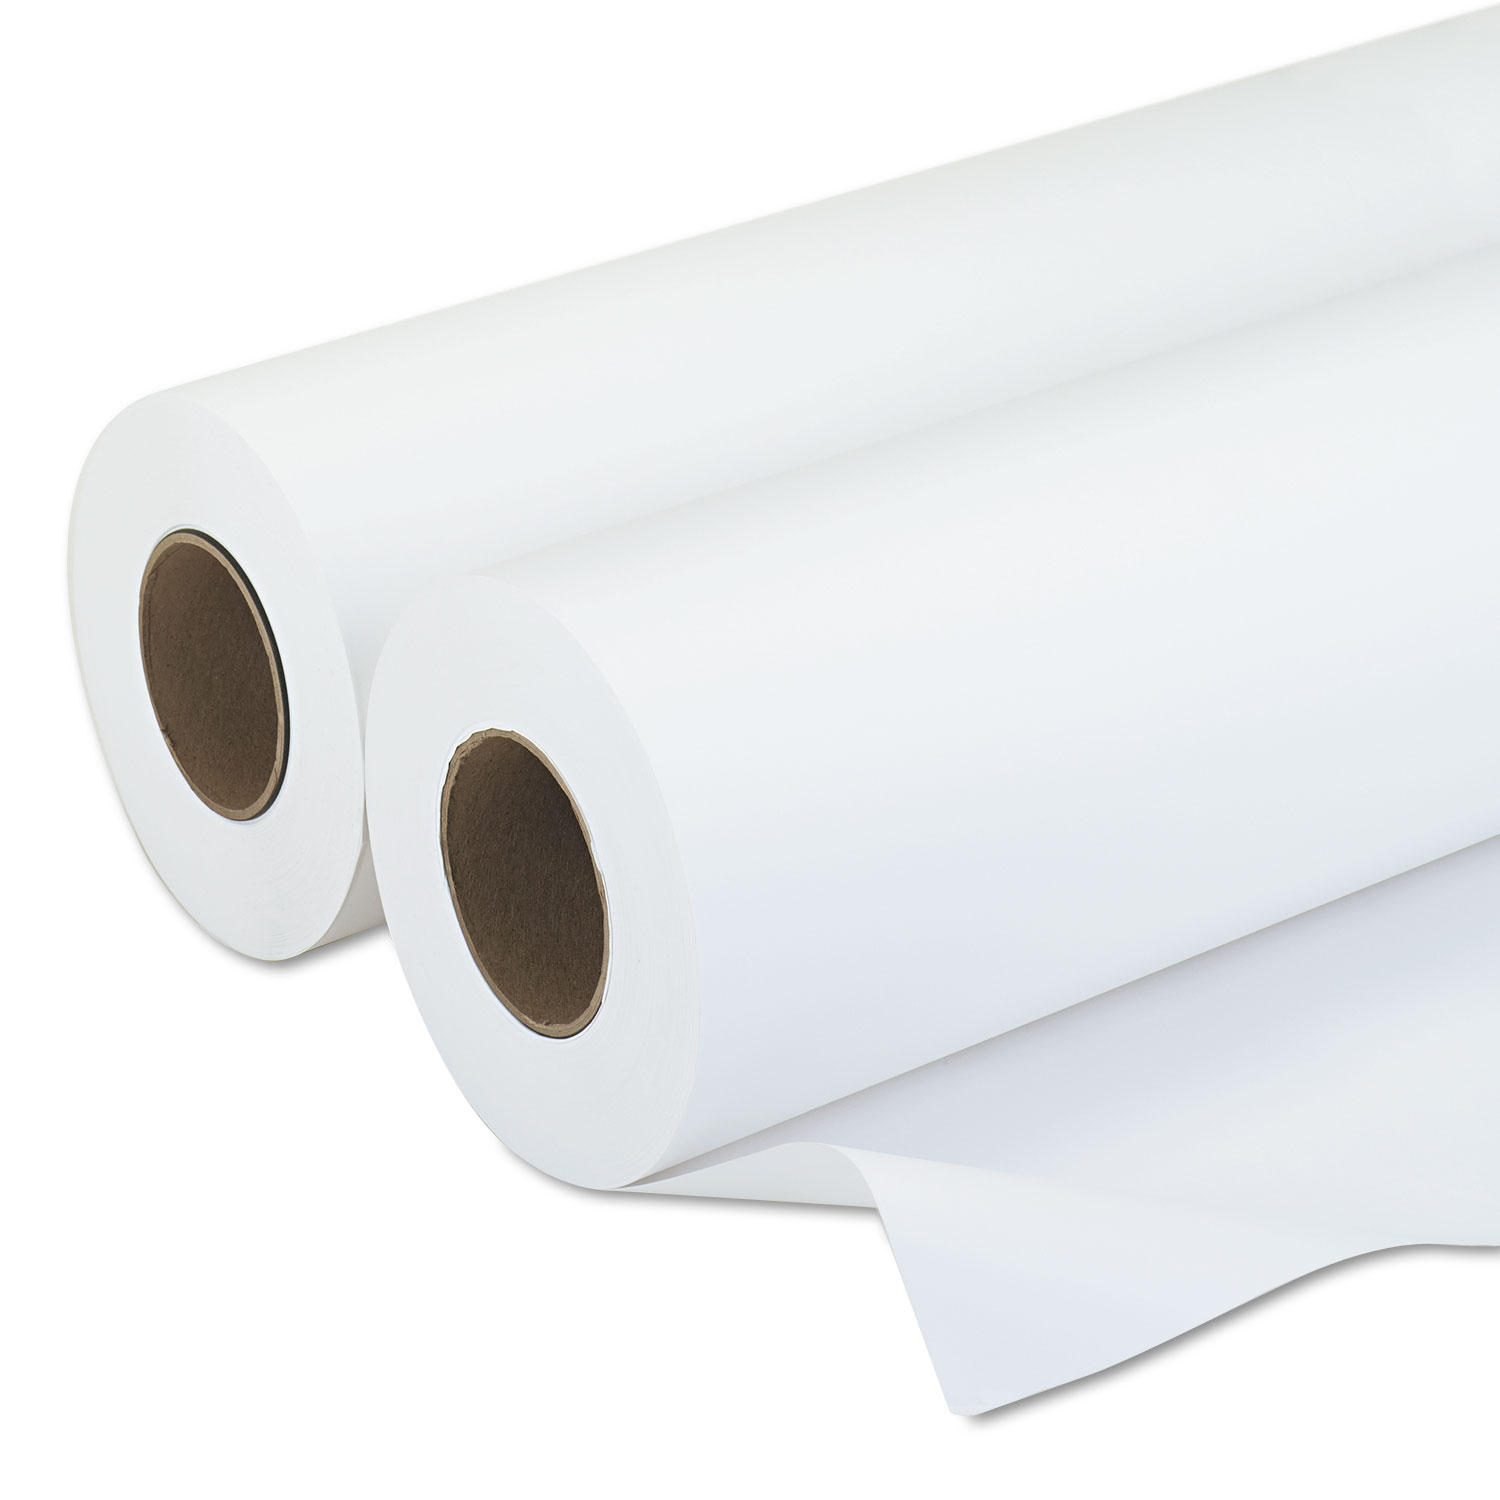  Iconex 9130 Amerigo Wide-Format Paper, 3 Core, 20 lb, 30 x 500 ft, Smooth White, 2/Pack (ICX90750203) 